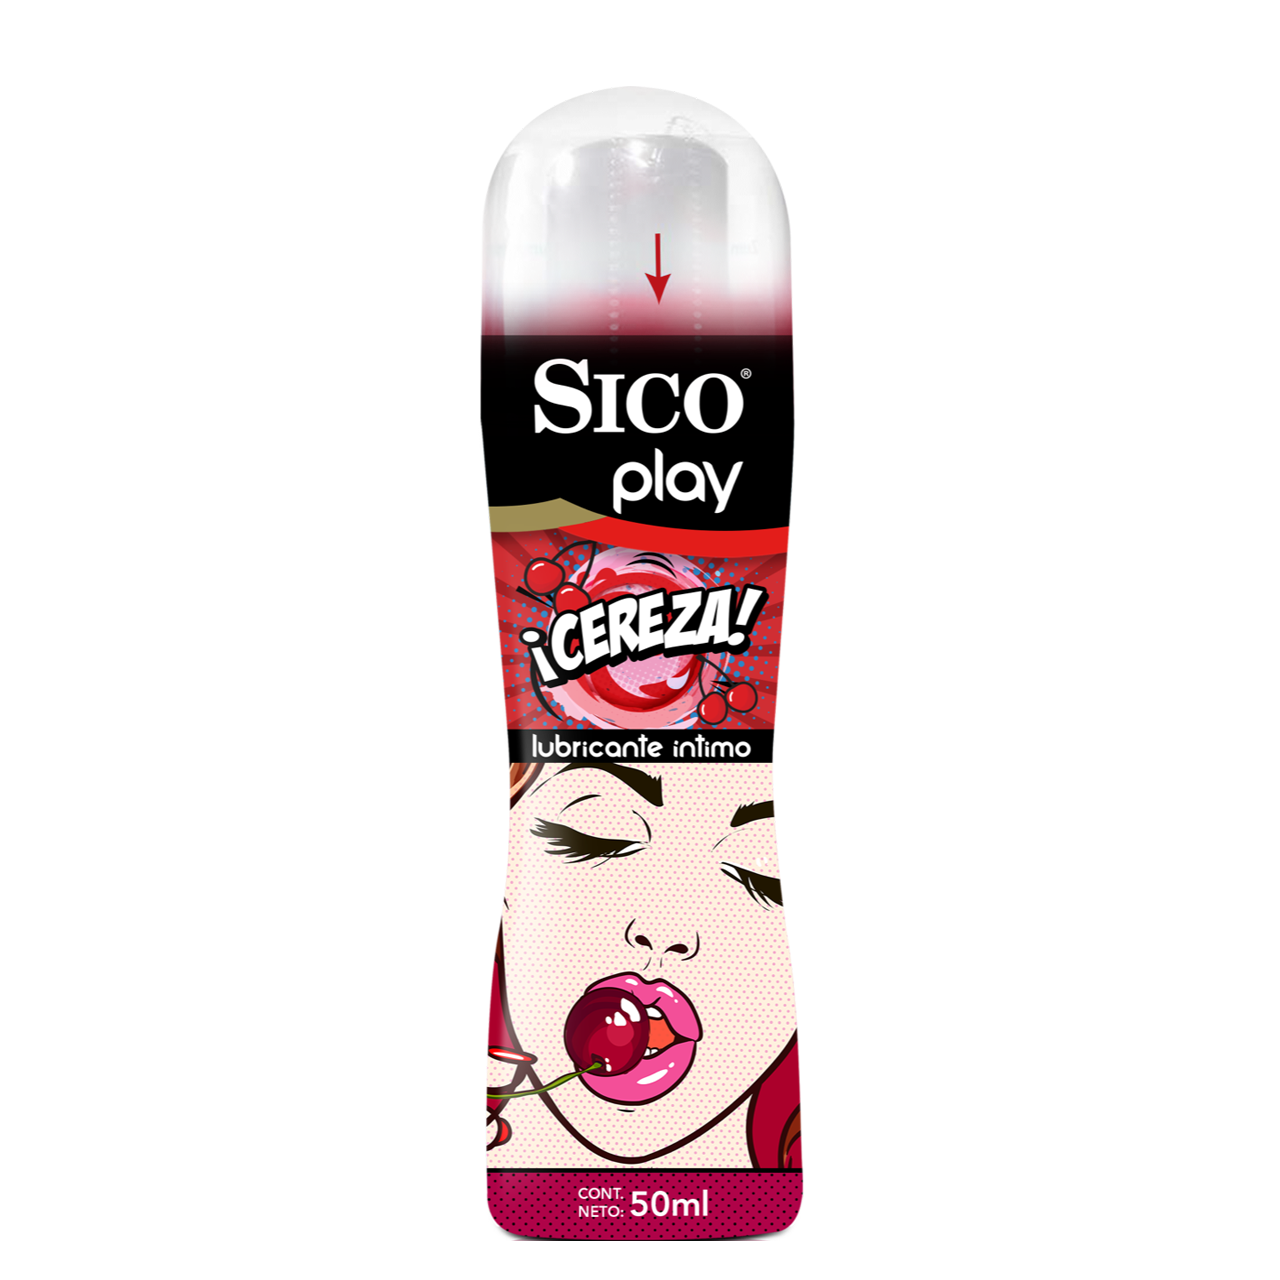 Sico play cherry lube